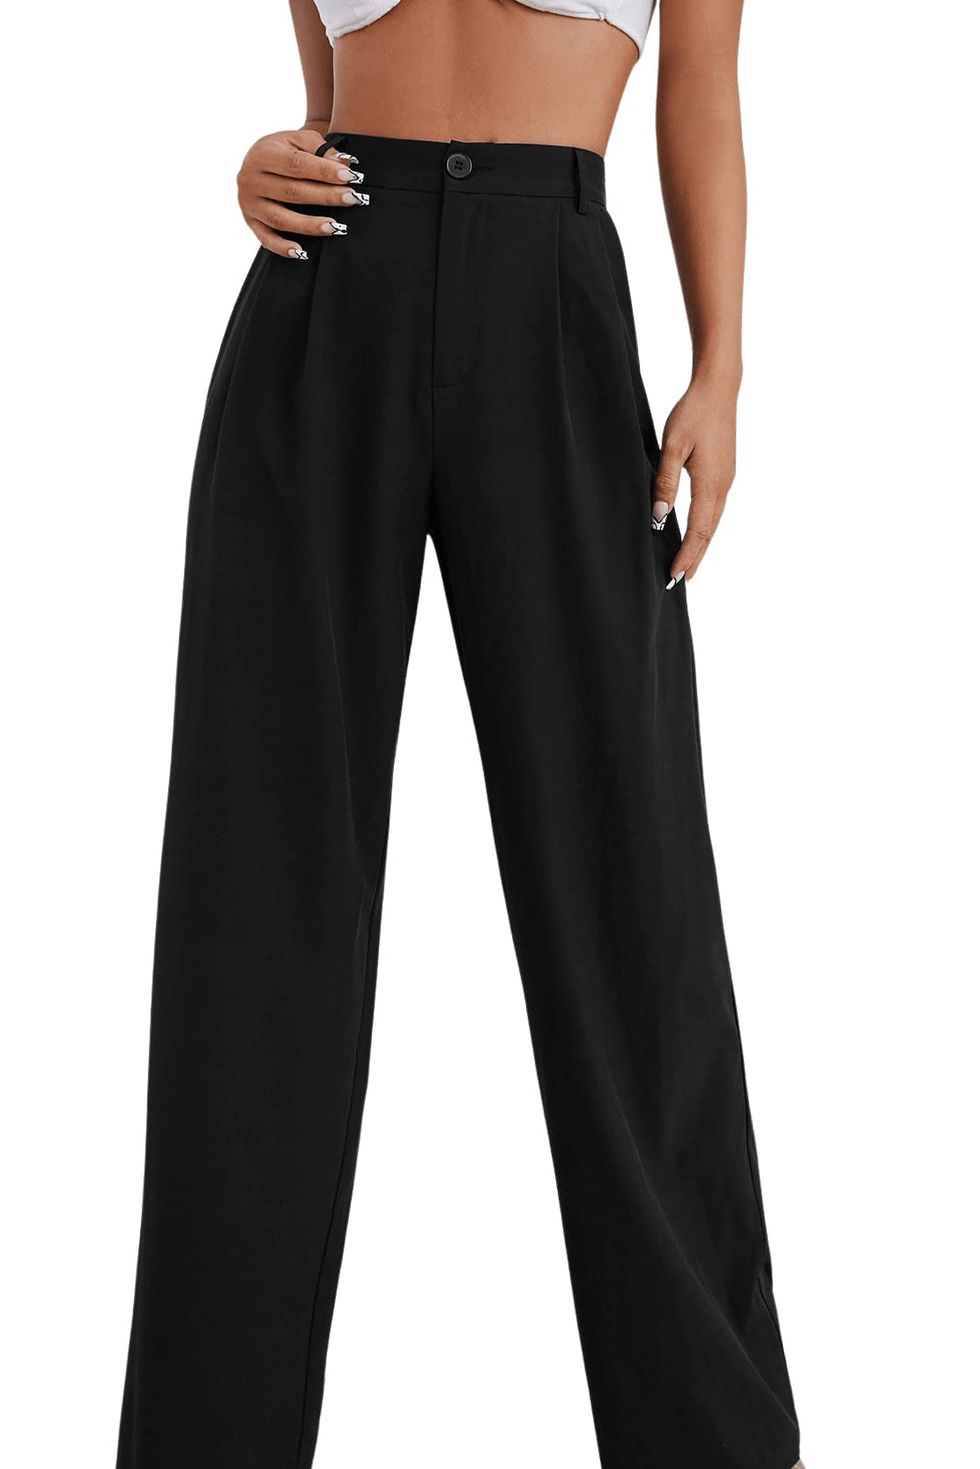 SweatyRocks Women's Elegant High Waist Pleated Pants Button Front Wide Leg Trouser  Pants Black XS at  Women's Clothing store